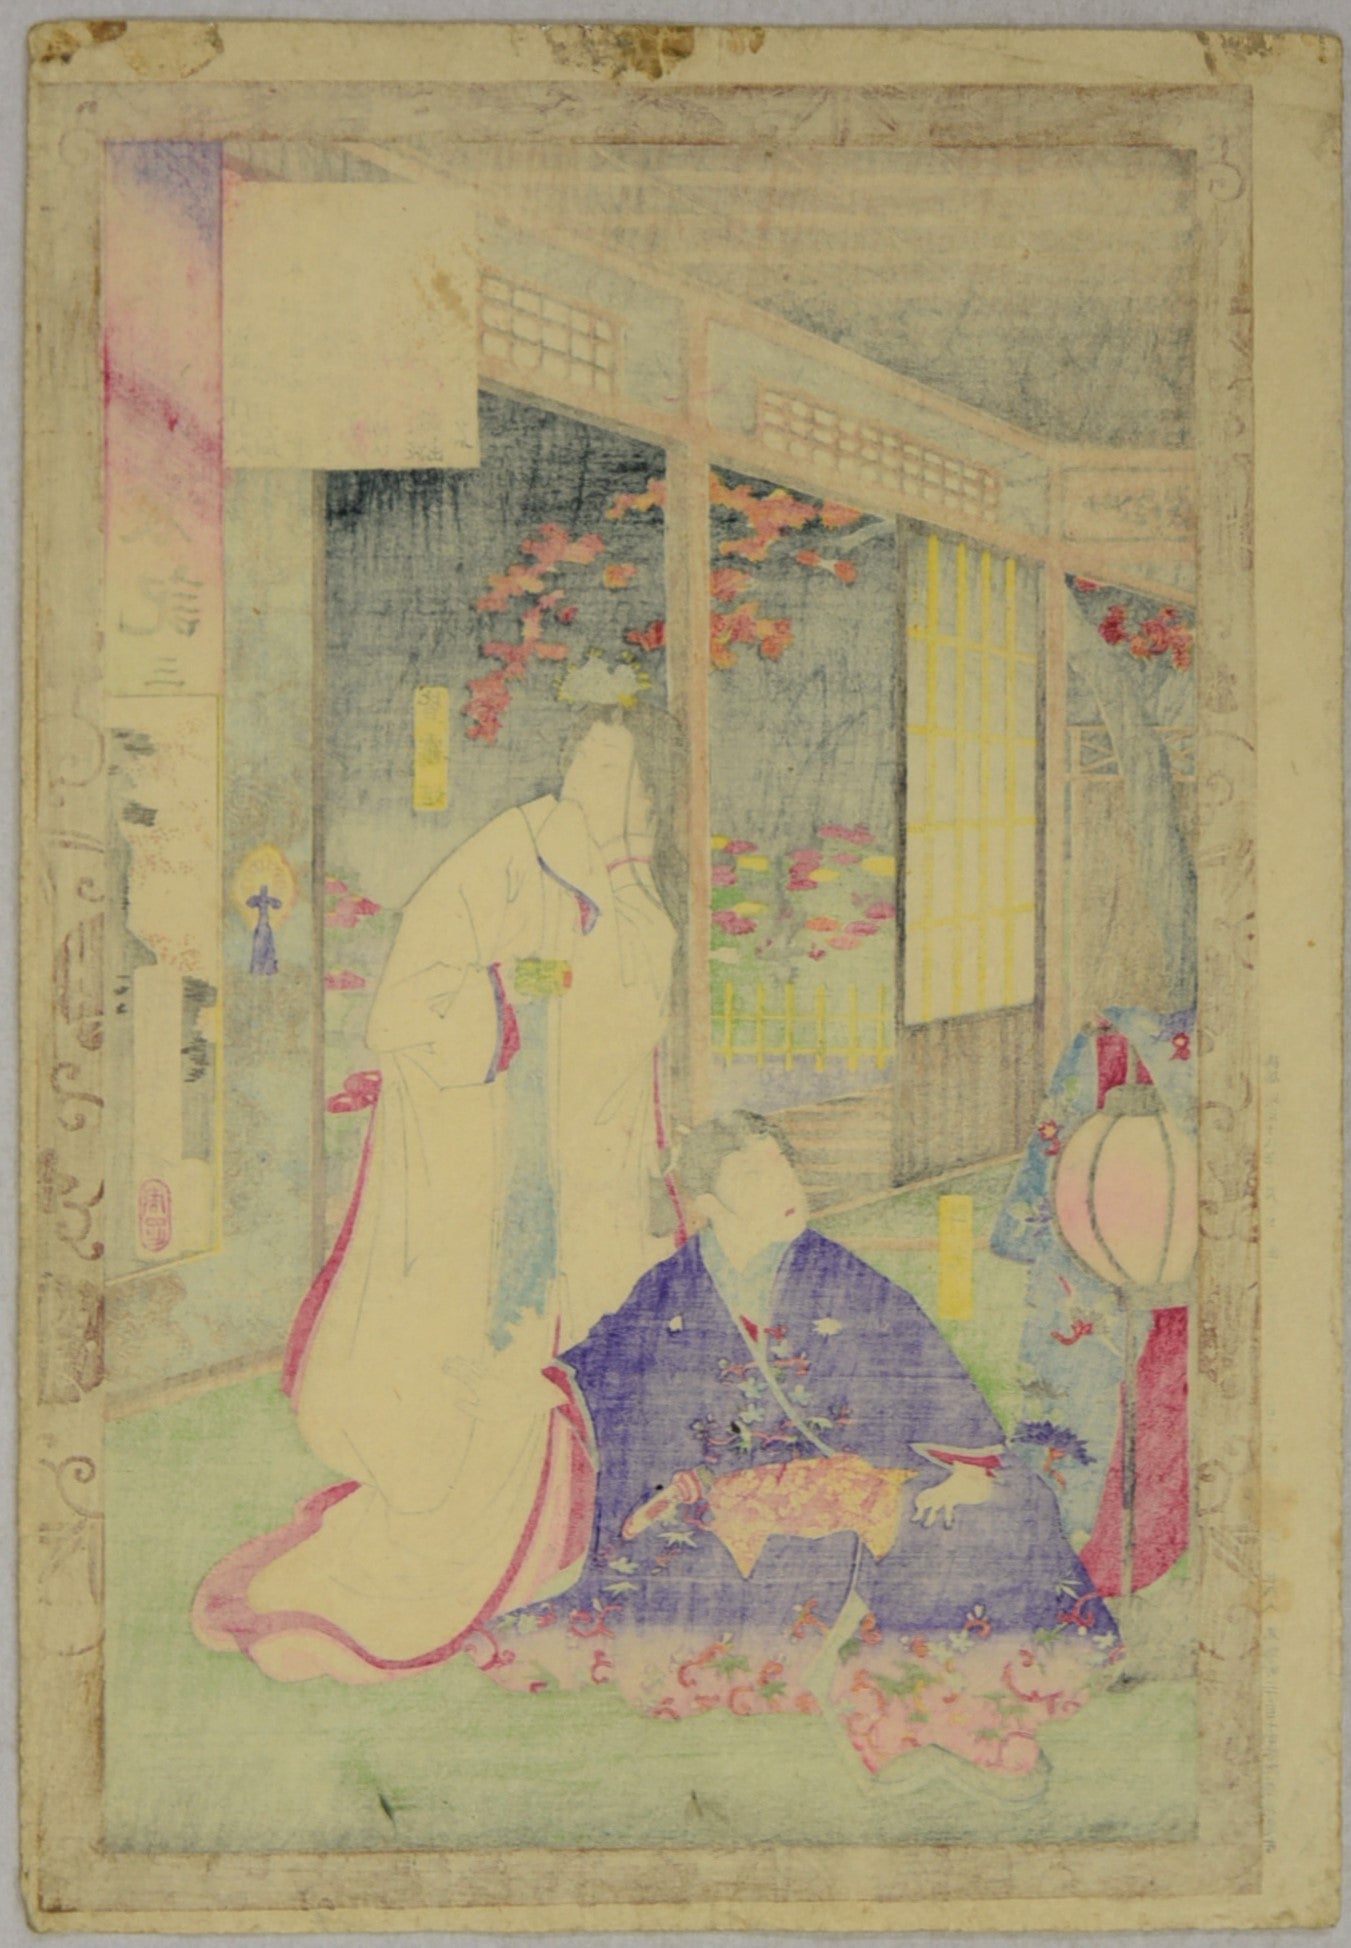 Ushiwakamaru from the series "Minamoto-Heike War Record" by Chikanobu / Ushiwakamaru de la série "Chronique de la guerre Minamoto-Heike "par Chikanobu (1885)